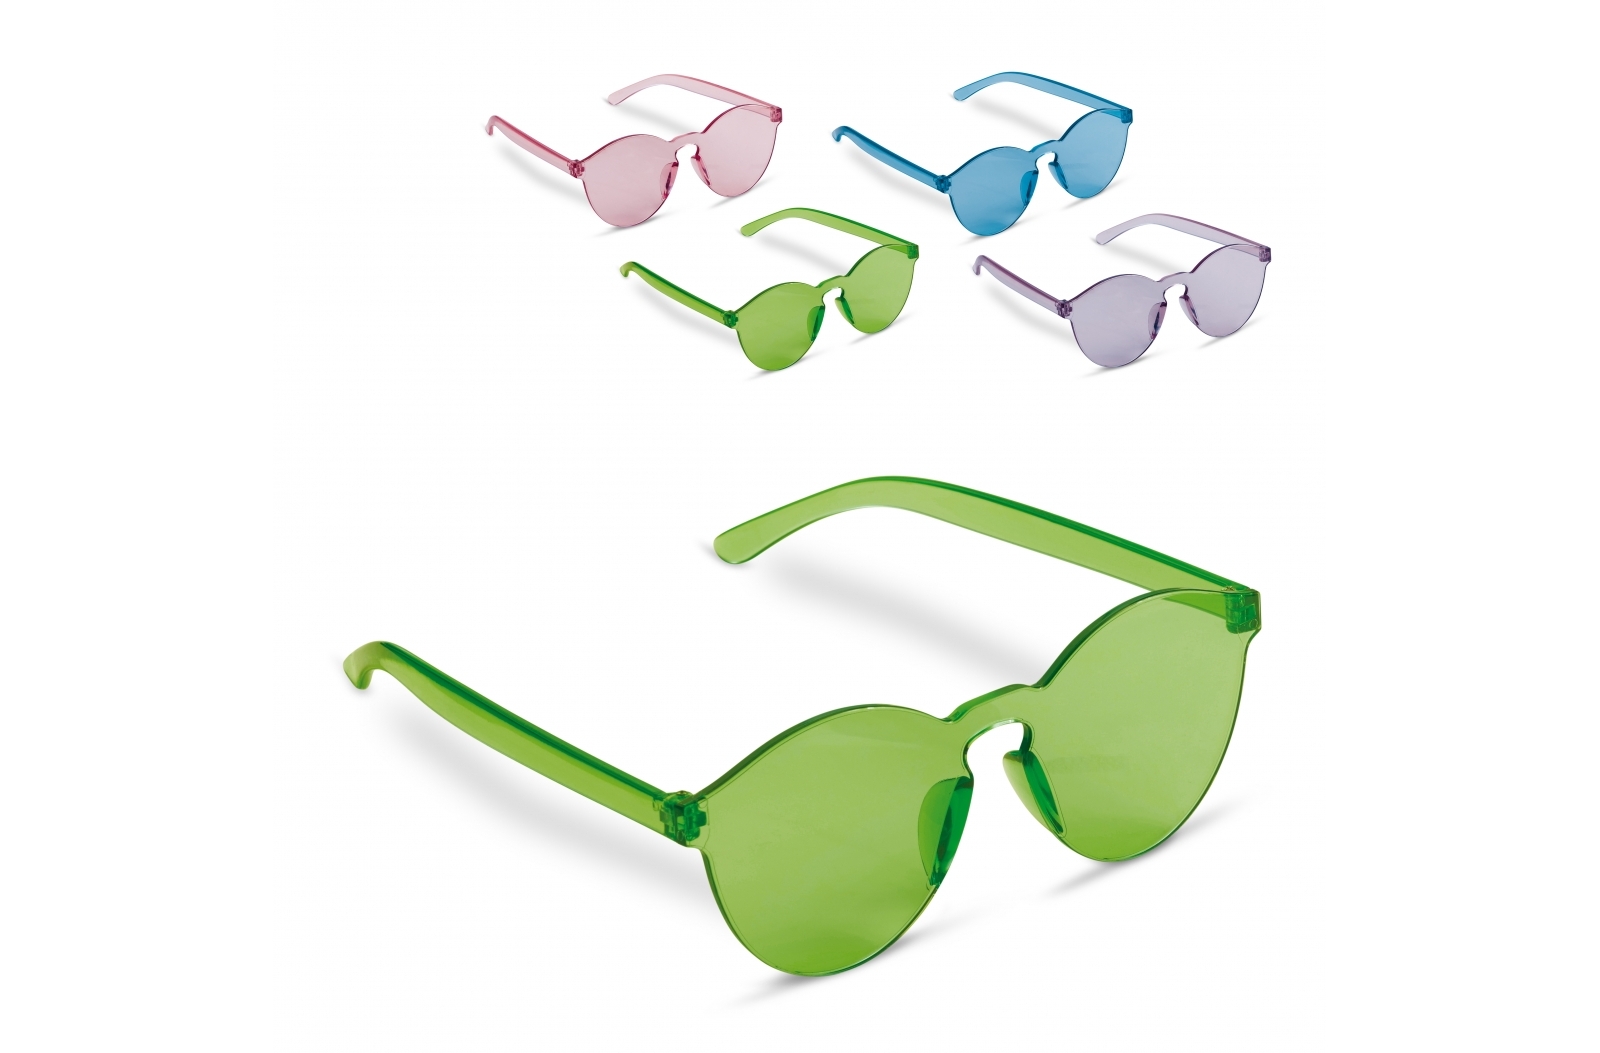 Retro-style sunglasses in pastel tones with UV400 filter - Dartmouth